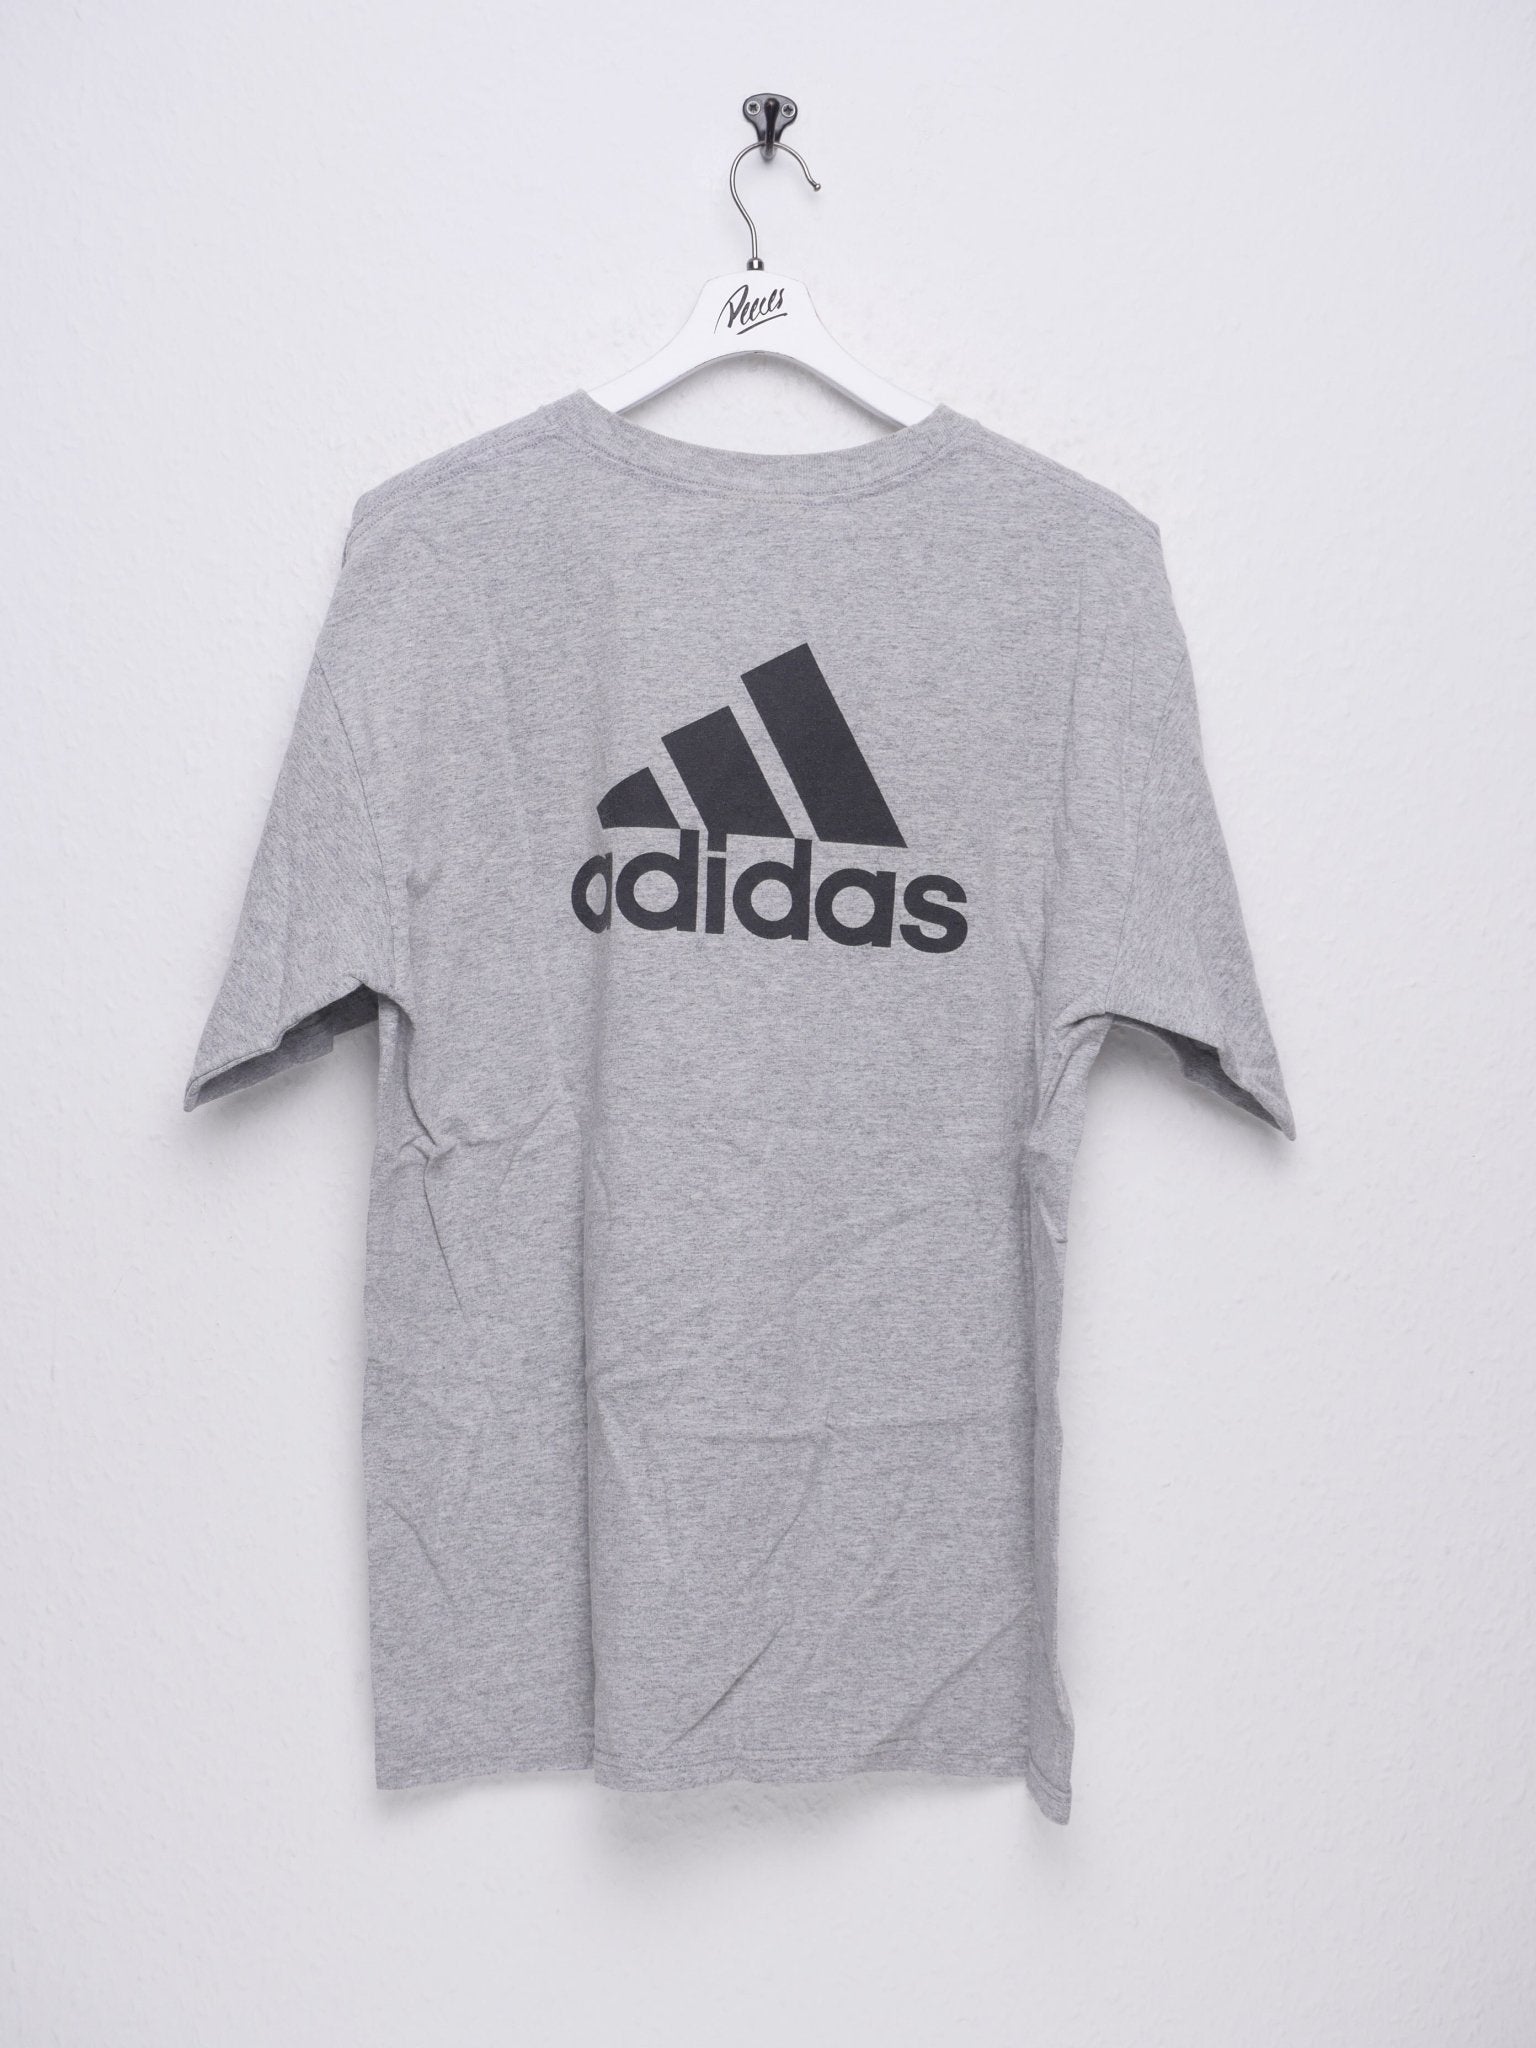 Adidas printed UMASS Basketball Spellout Vintage Shirt - Peeces